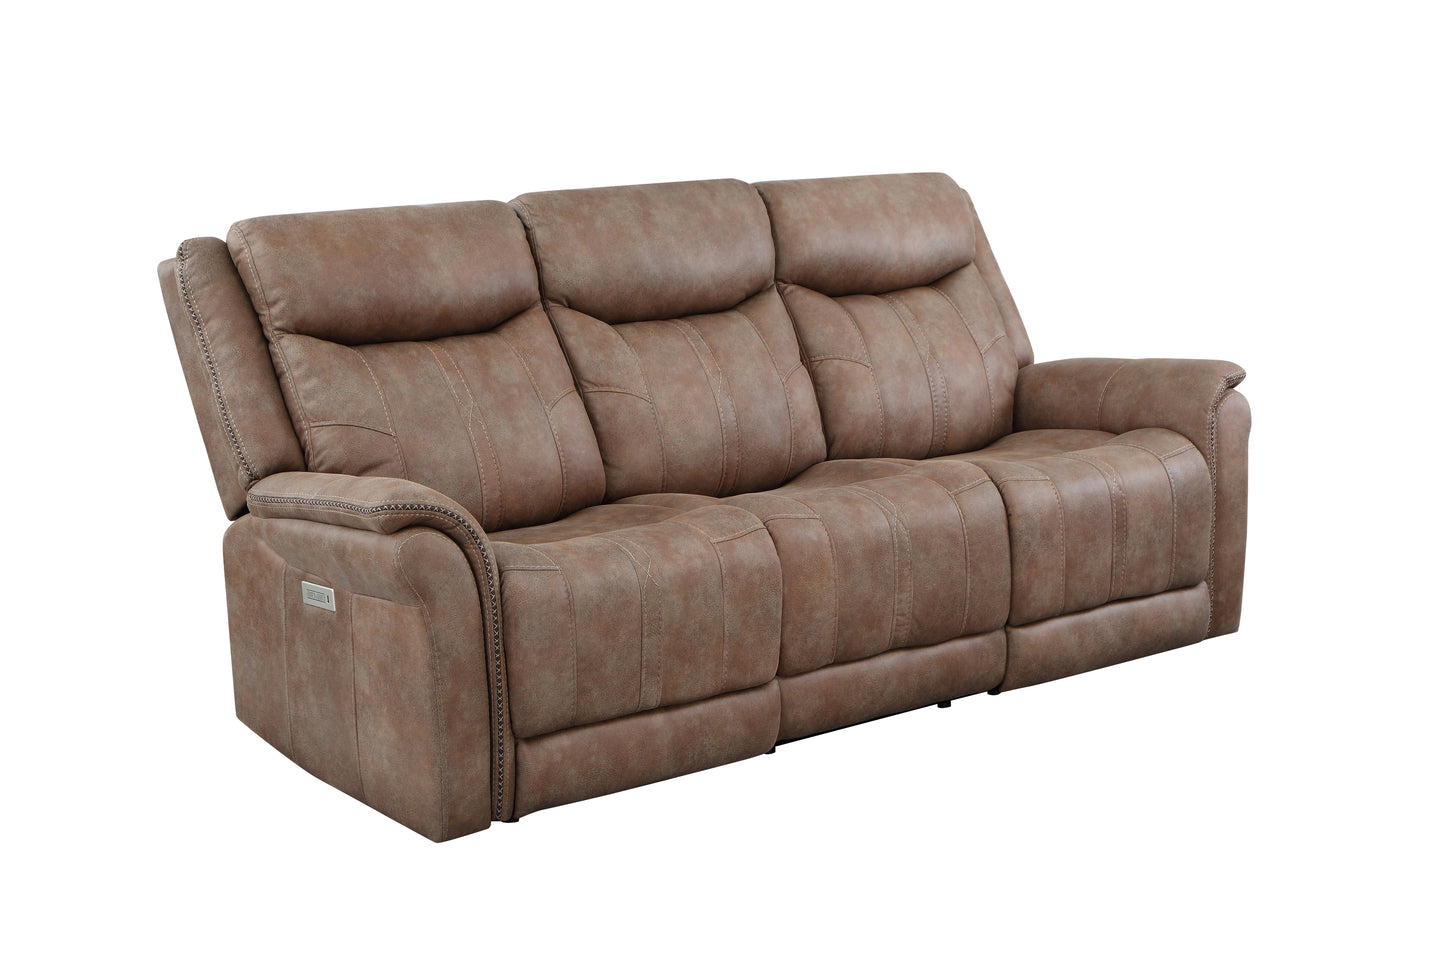 Luxurious Camel Power Sofa Recliner - Traditional Meets Modern - Power Footrest, Power Headrest, USB Charging